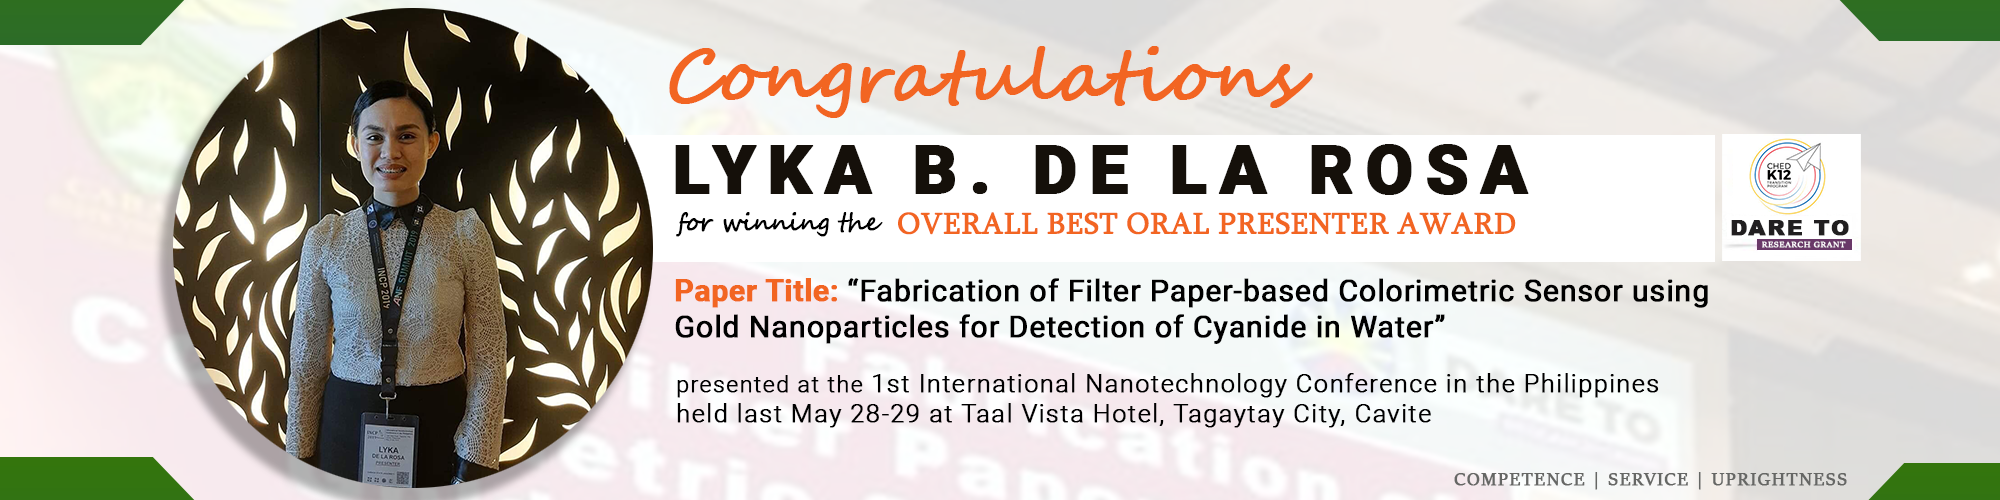 Lyka B. Dela Rosa - Overall best oral presenter awardee